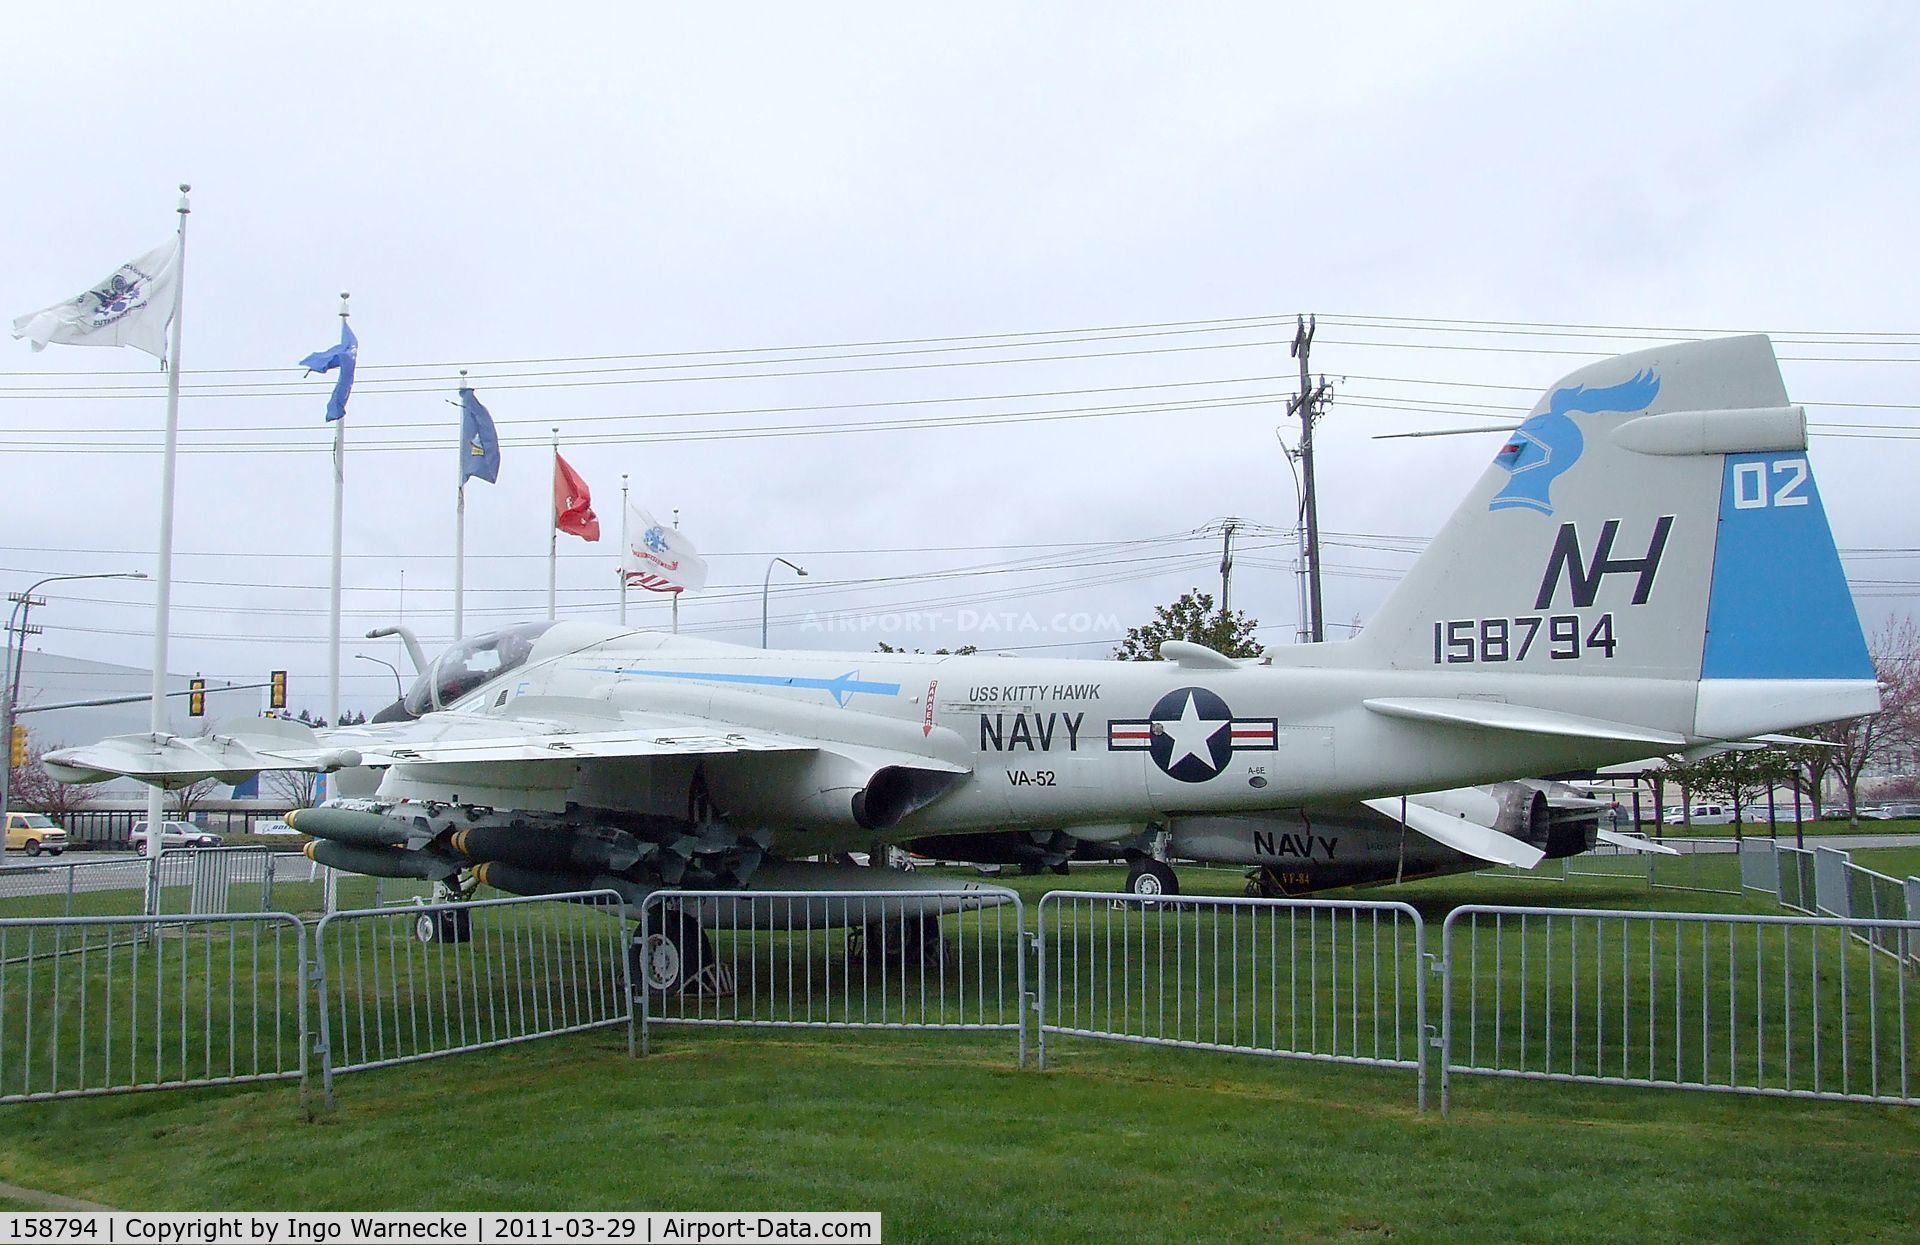 158794, Grumman A-6E Intruder C/N I-530, Grumman A-6E Intruder at the Museum of Flight, Seattle WA